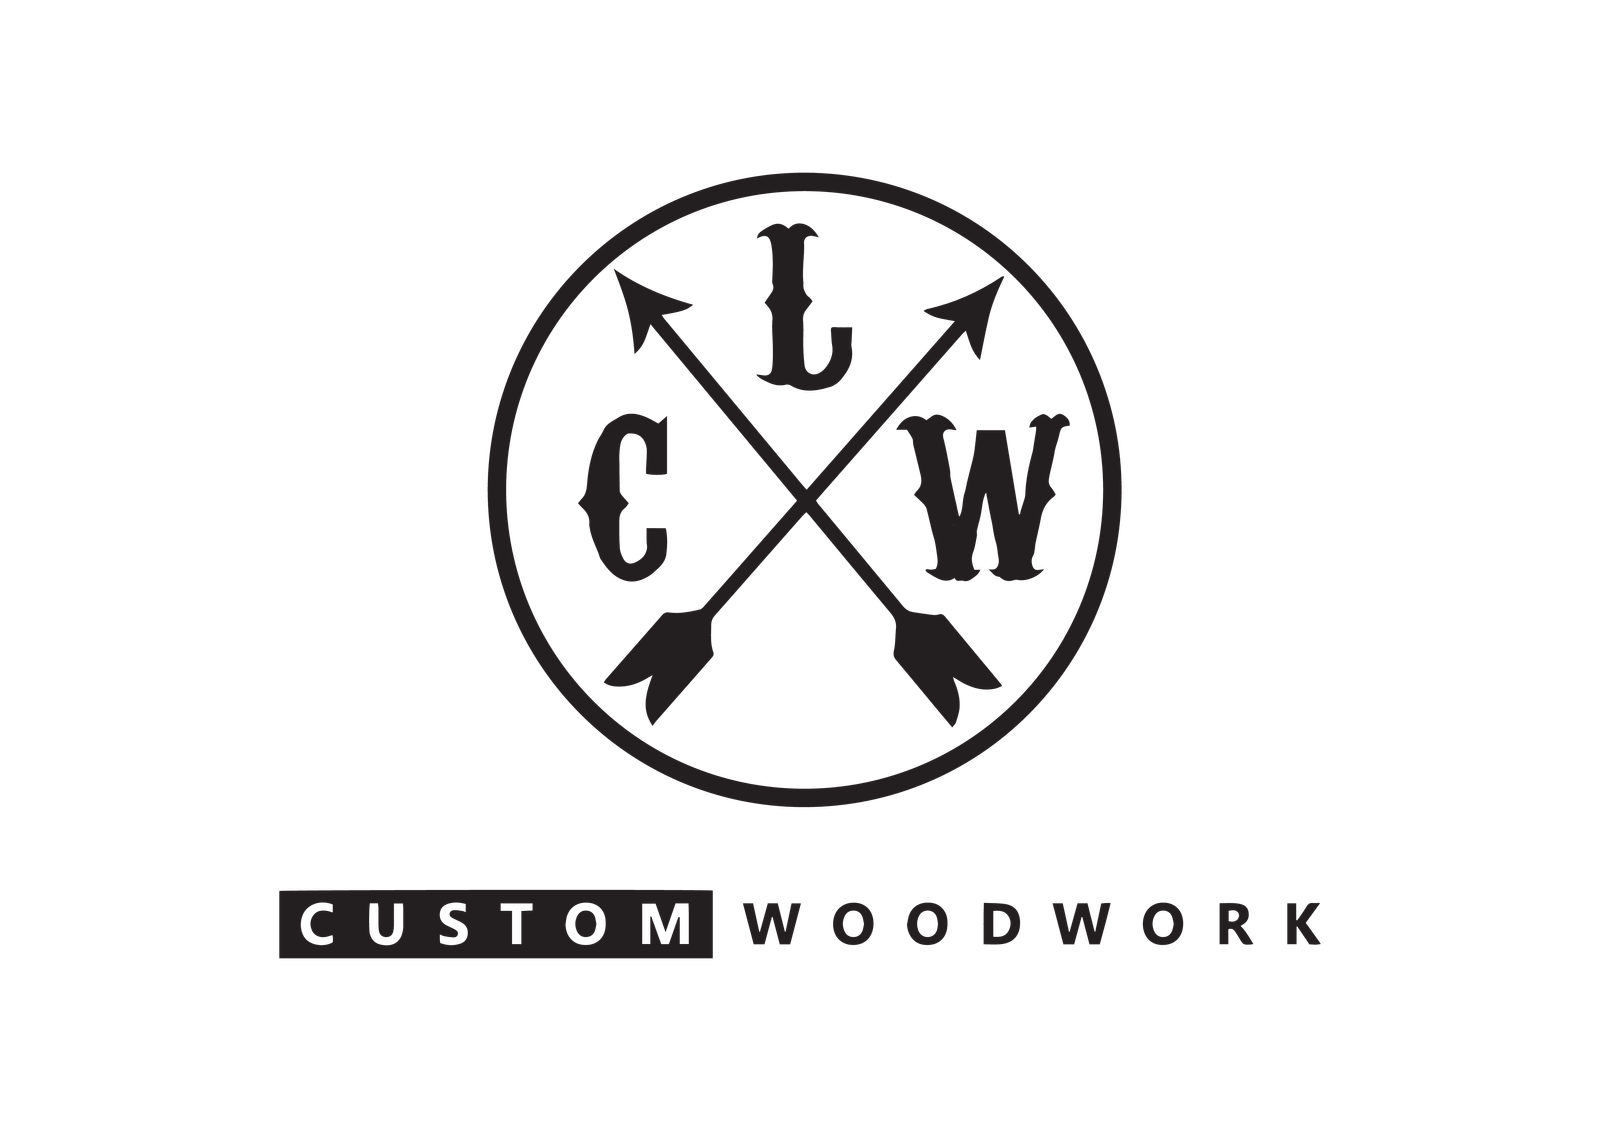 Lee's Custom Woodwork